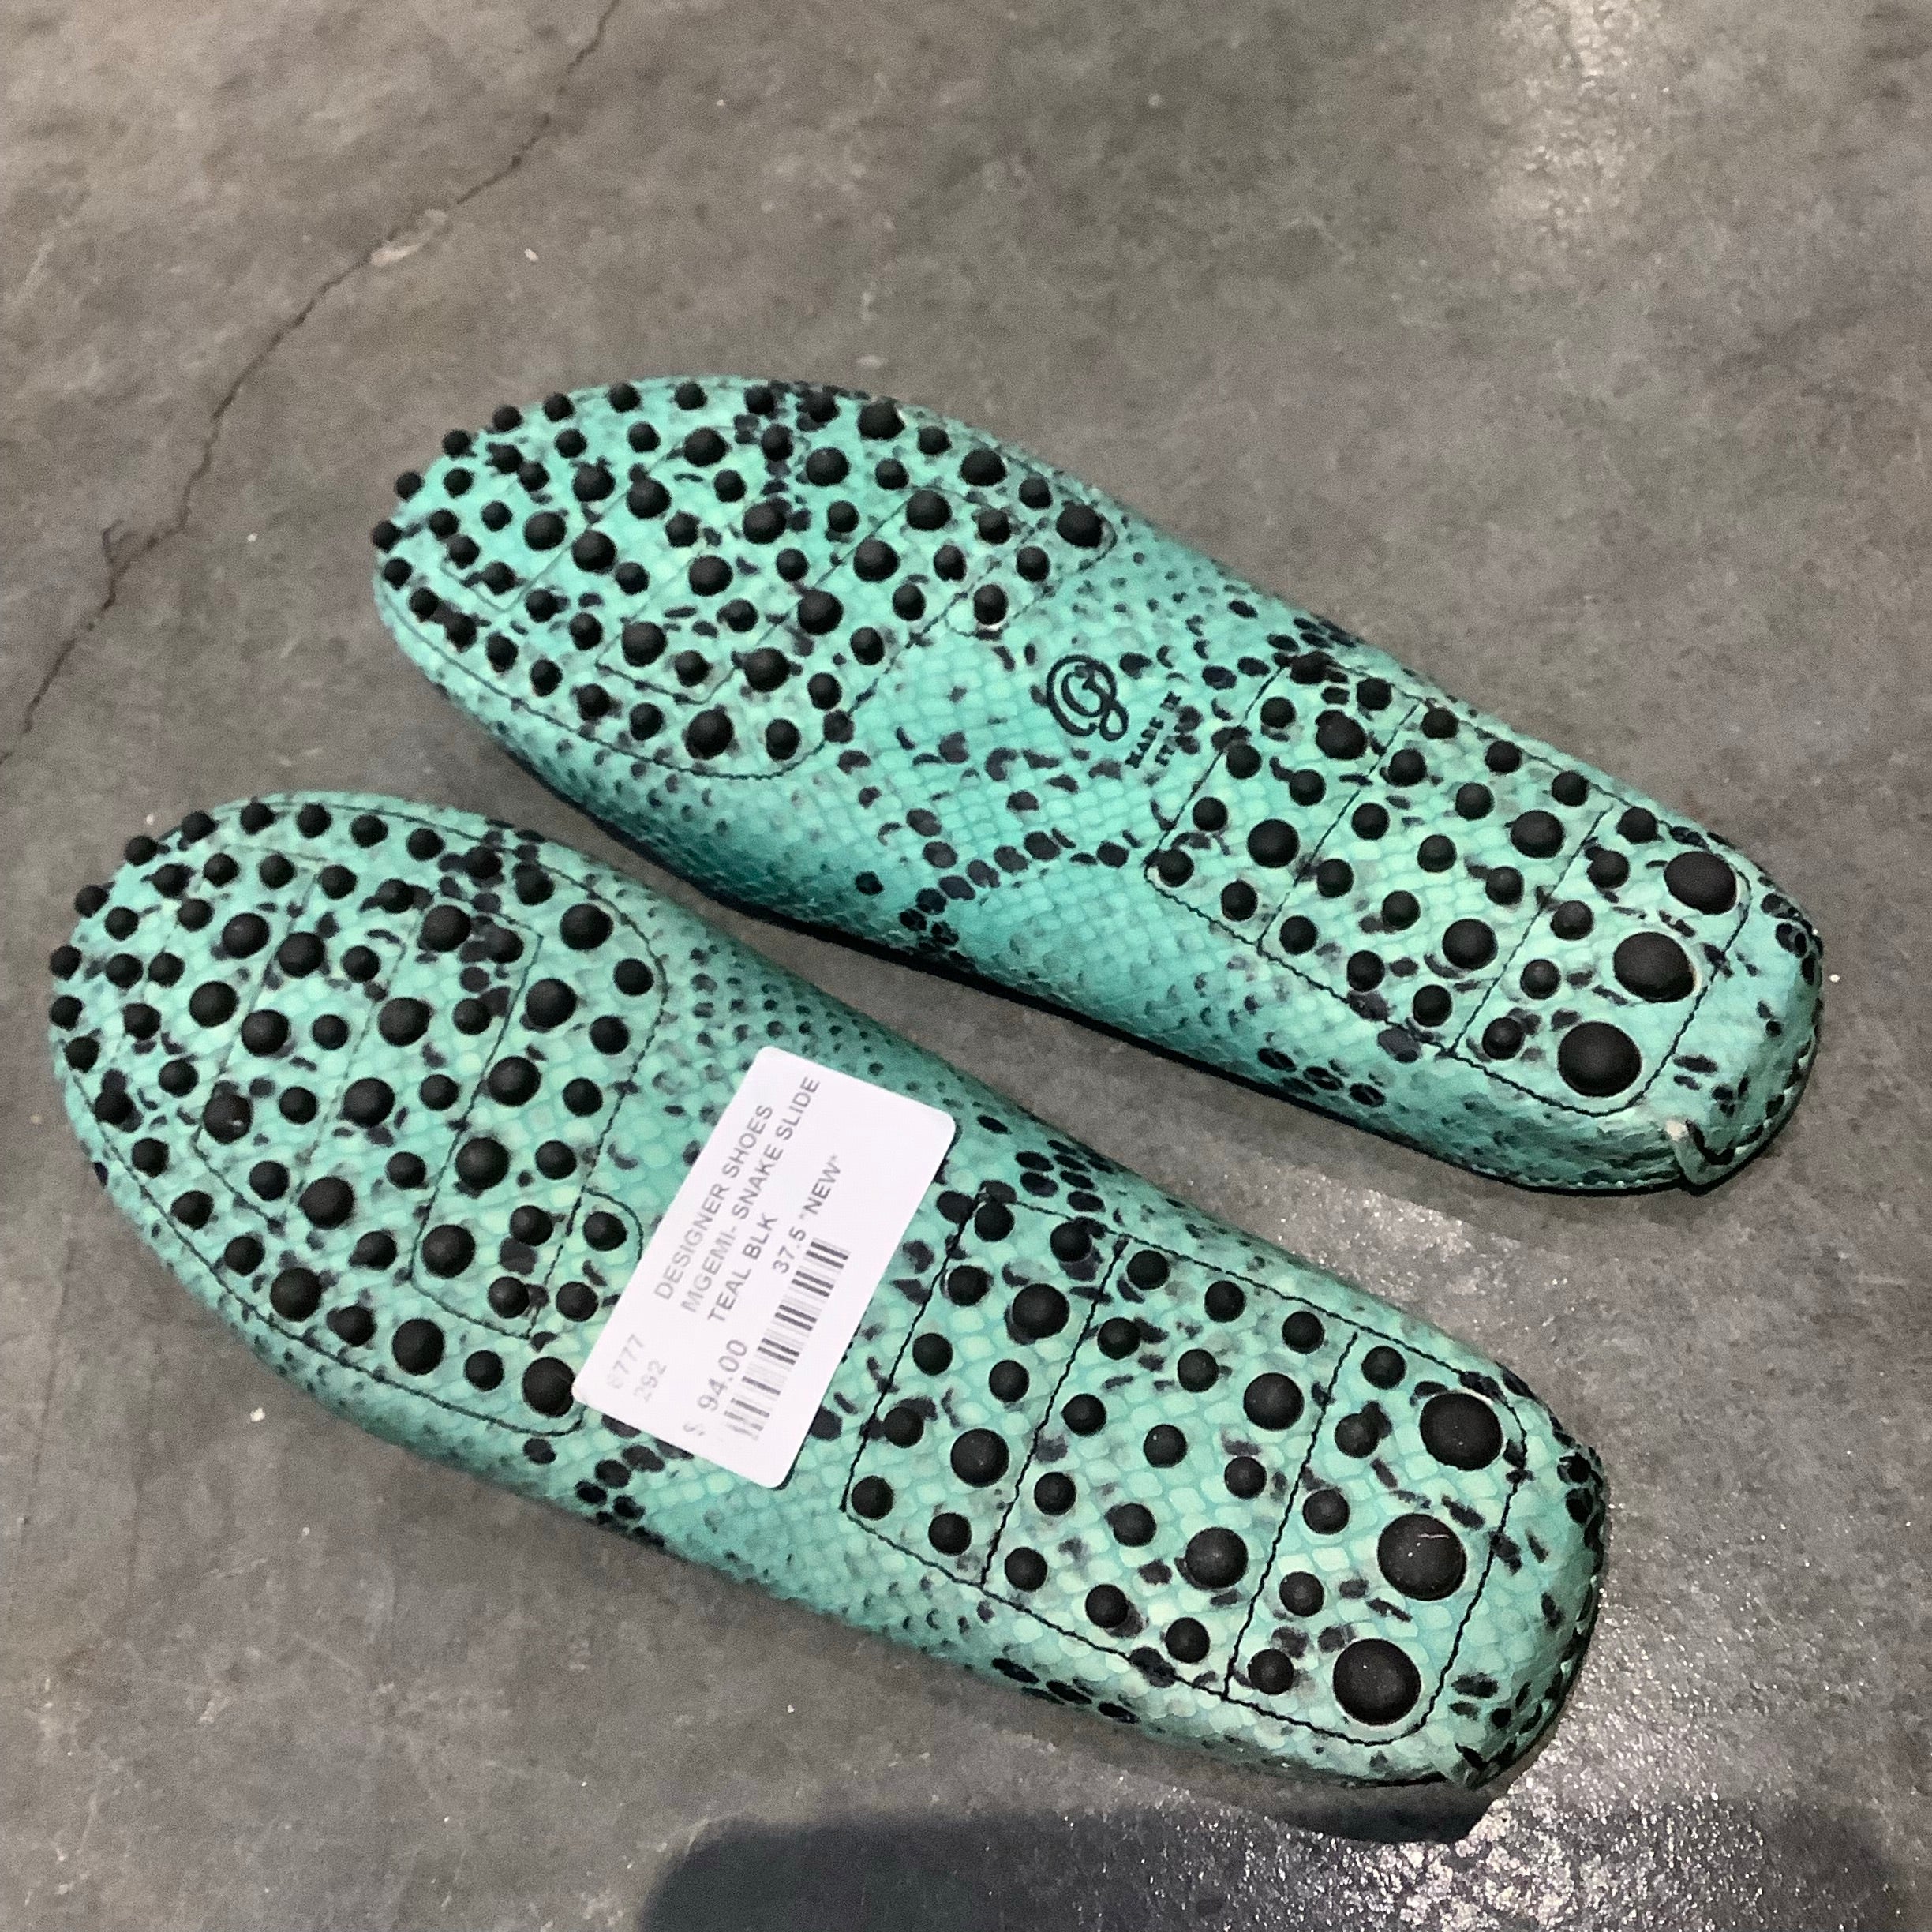 M. Gemi Blue Shoe Size 37.5 New